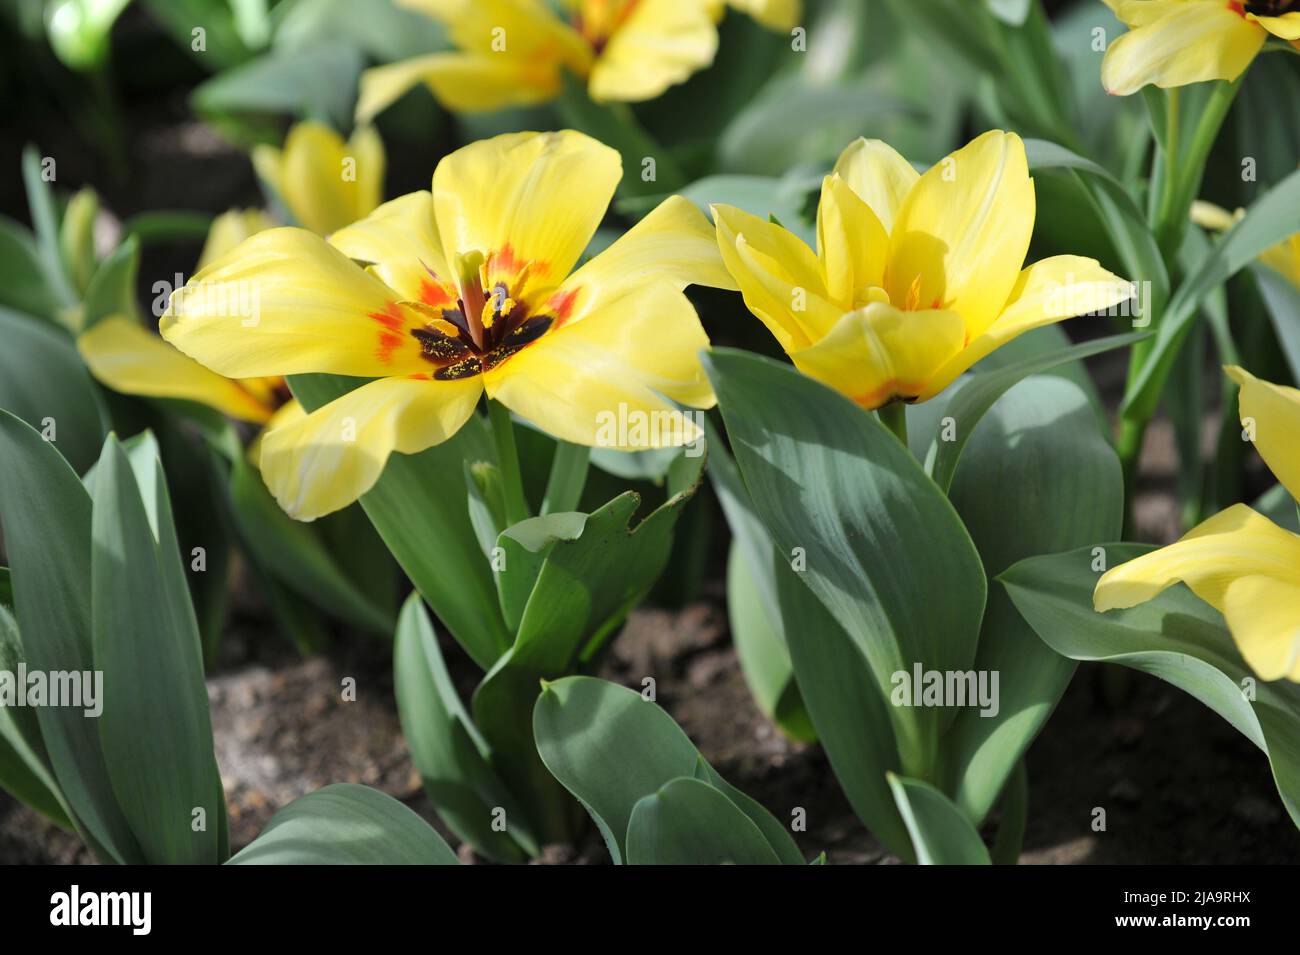 Gelbe Fosteriana Tulpen (Tulipa) Natura Artis Magistra blüht im April in einem Garten Stockfoto